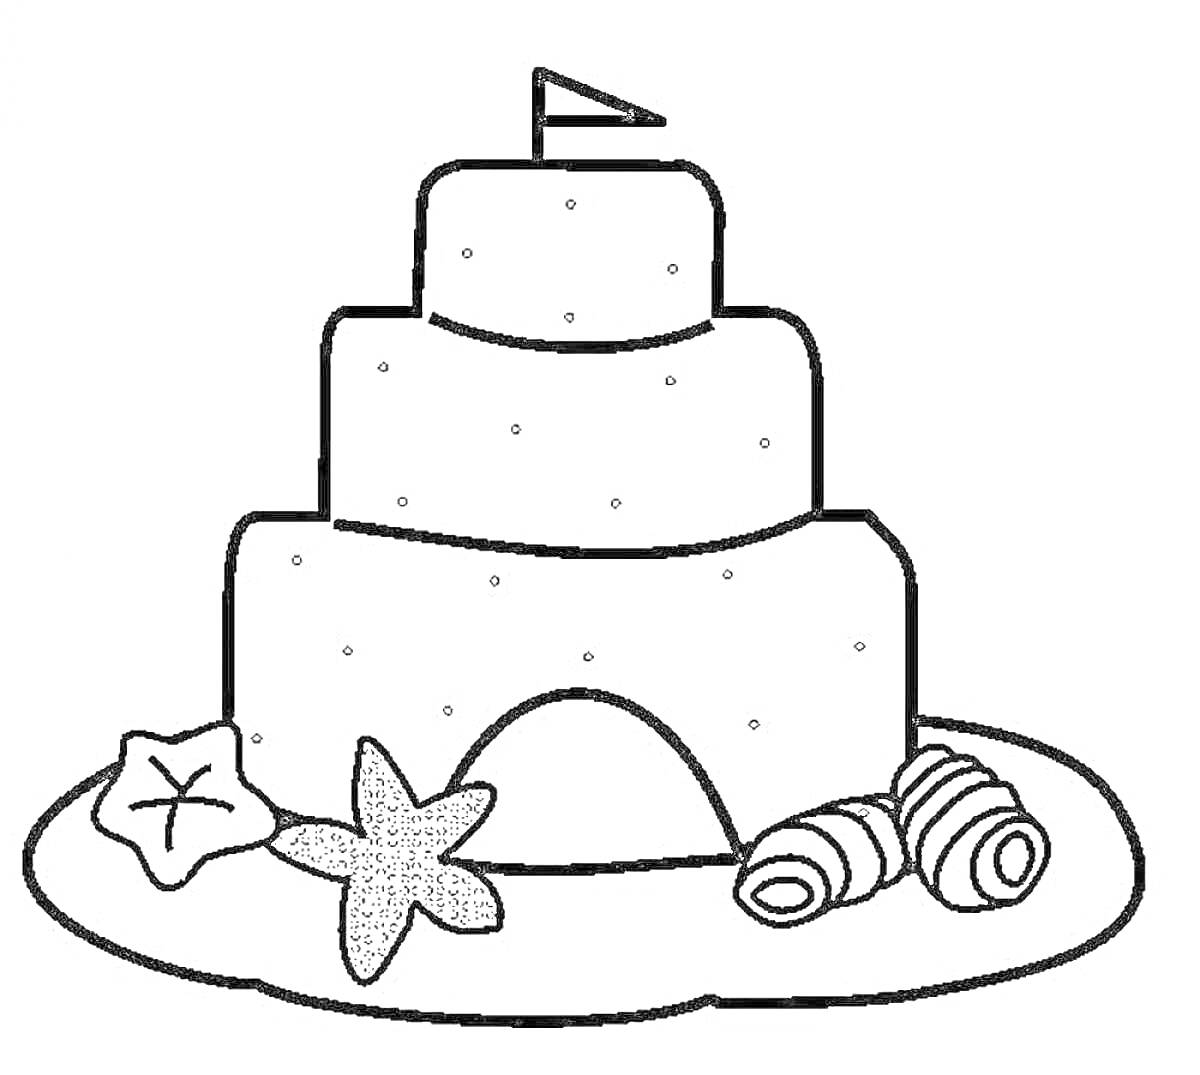 Раскраска Трёхъярусный торт с флажком, морскими звездами и ракушками на подносе